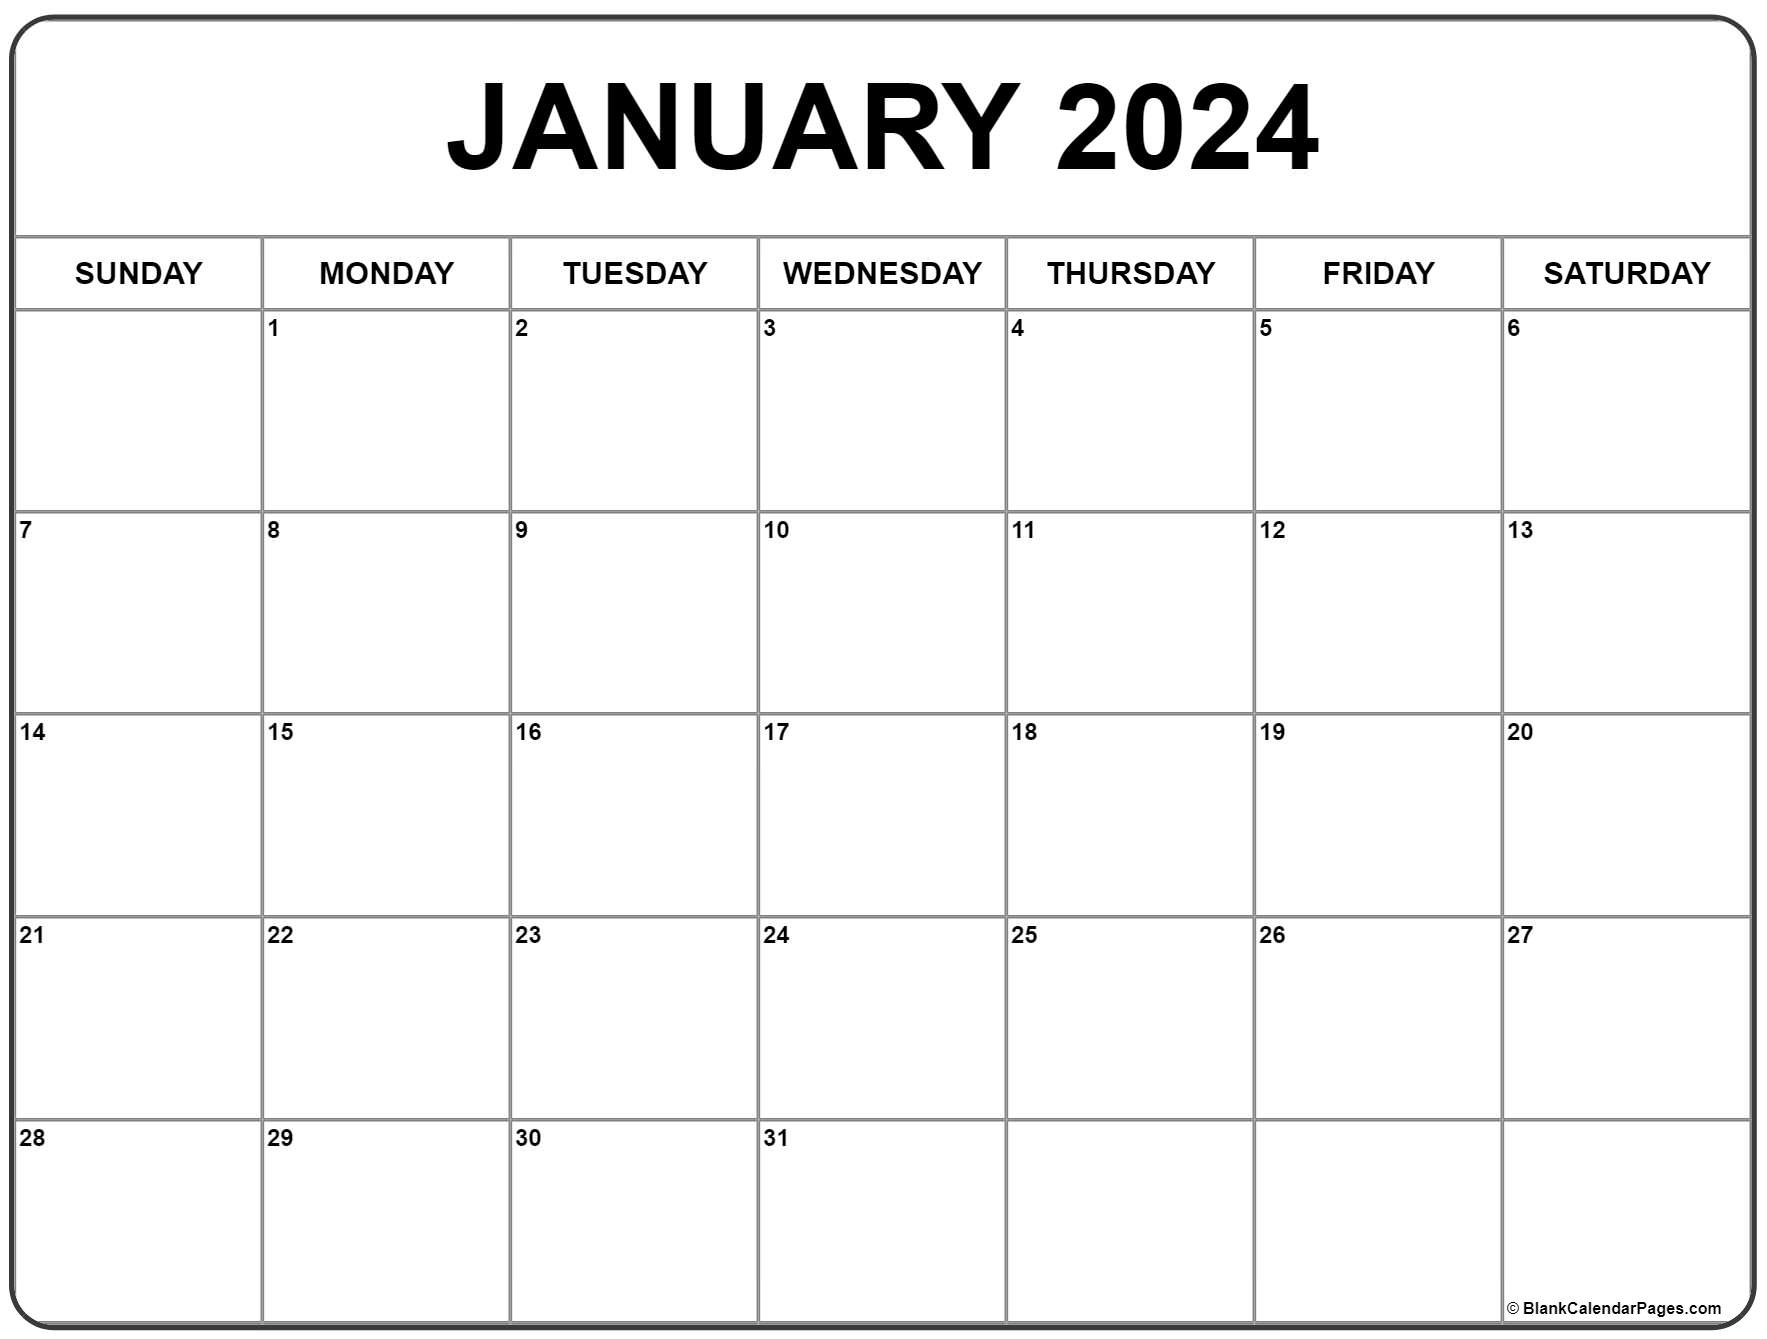 January 2024 Calendar | Free Printable Calendar for Free Calendar Printable January 2024